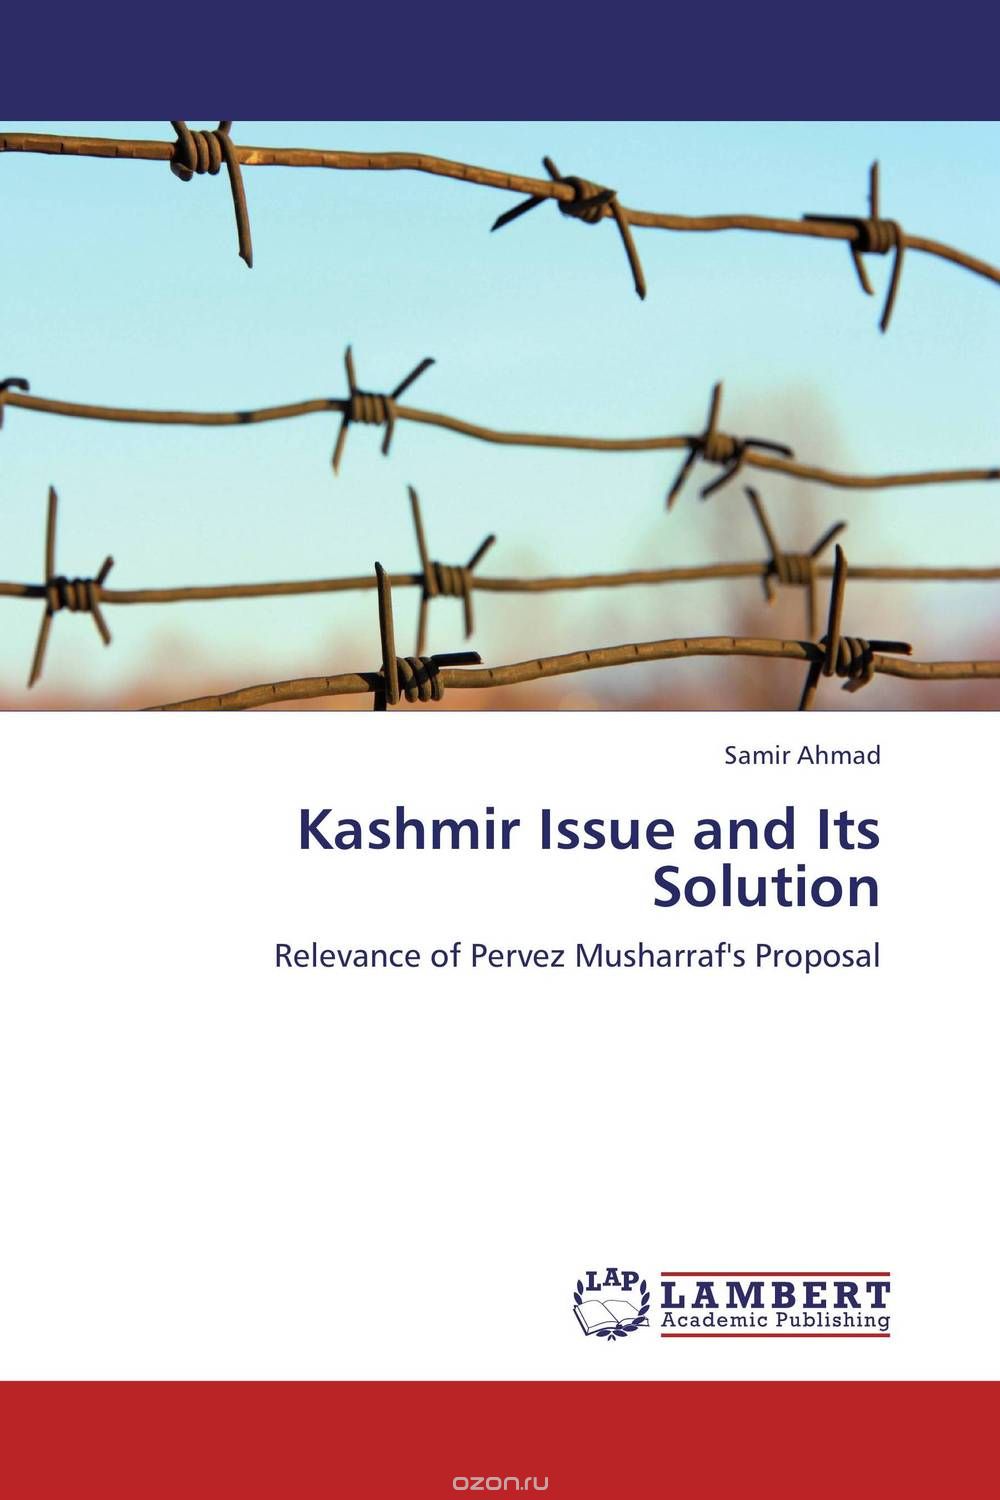 Скачать книгу "Kashmir Issue and Its Solution"